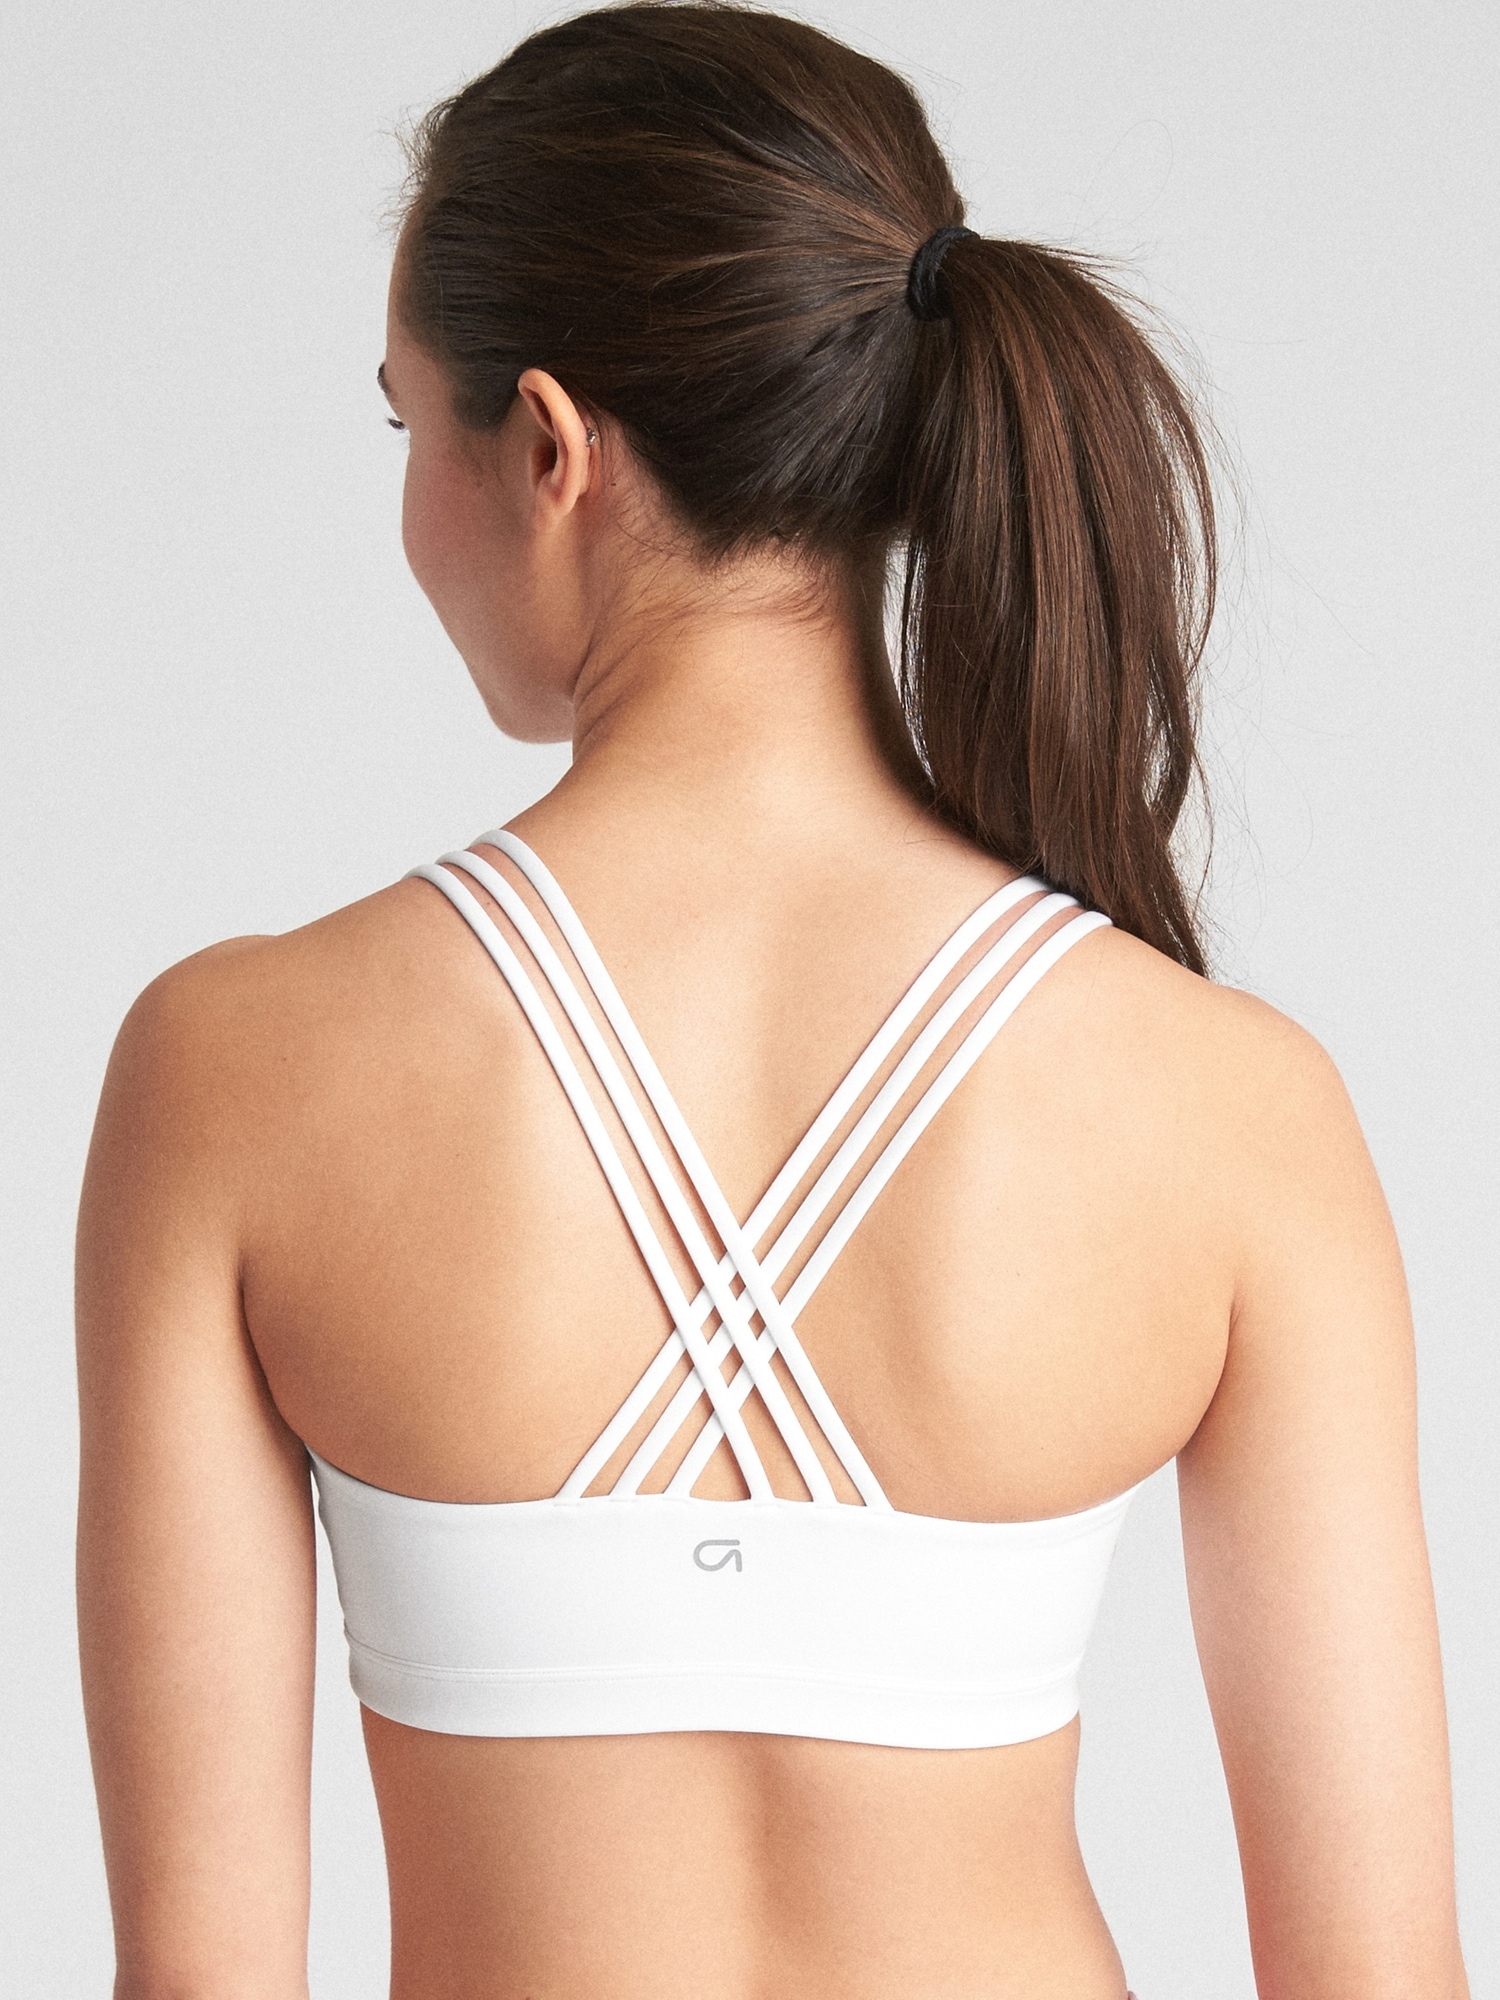 GAP Woman's Optical White Sports bra with double straps